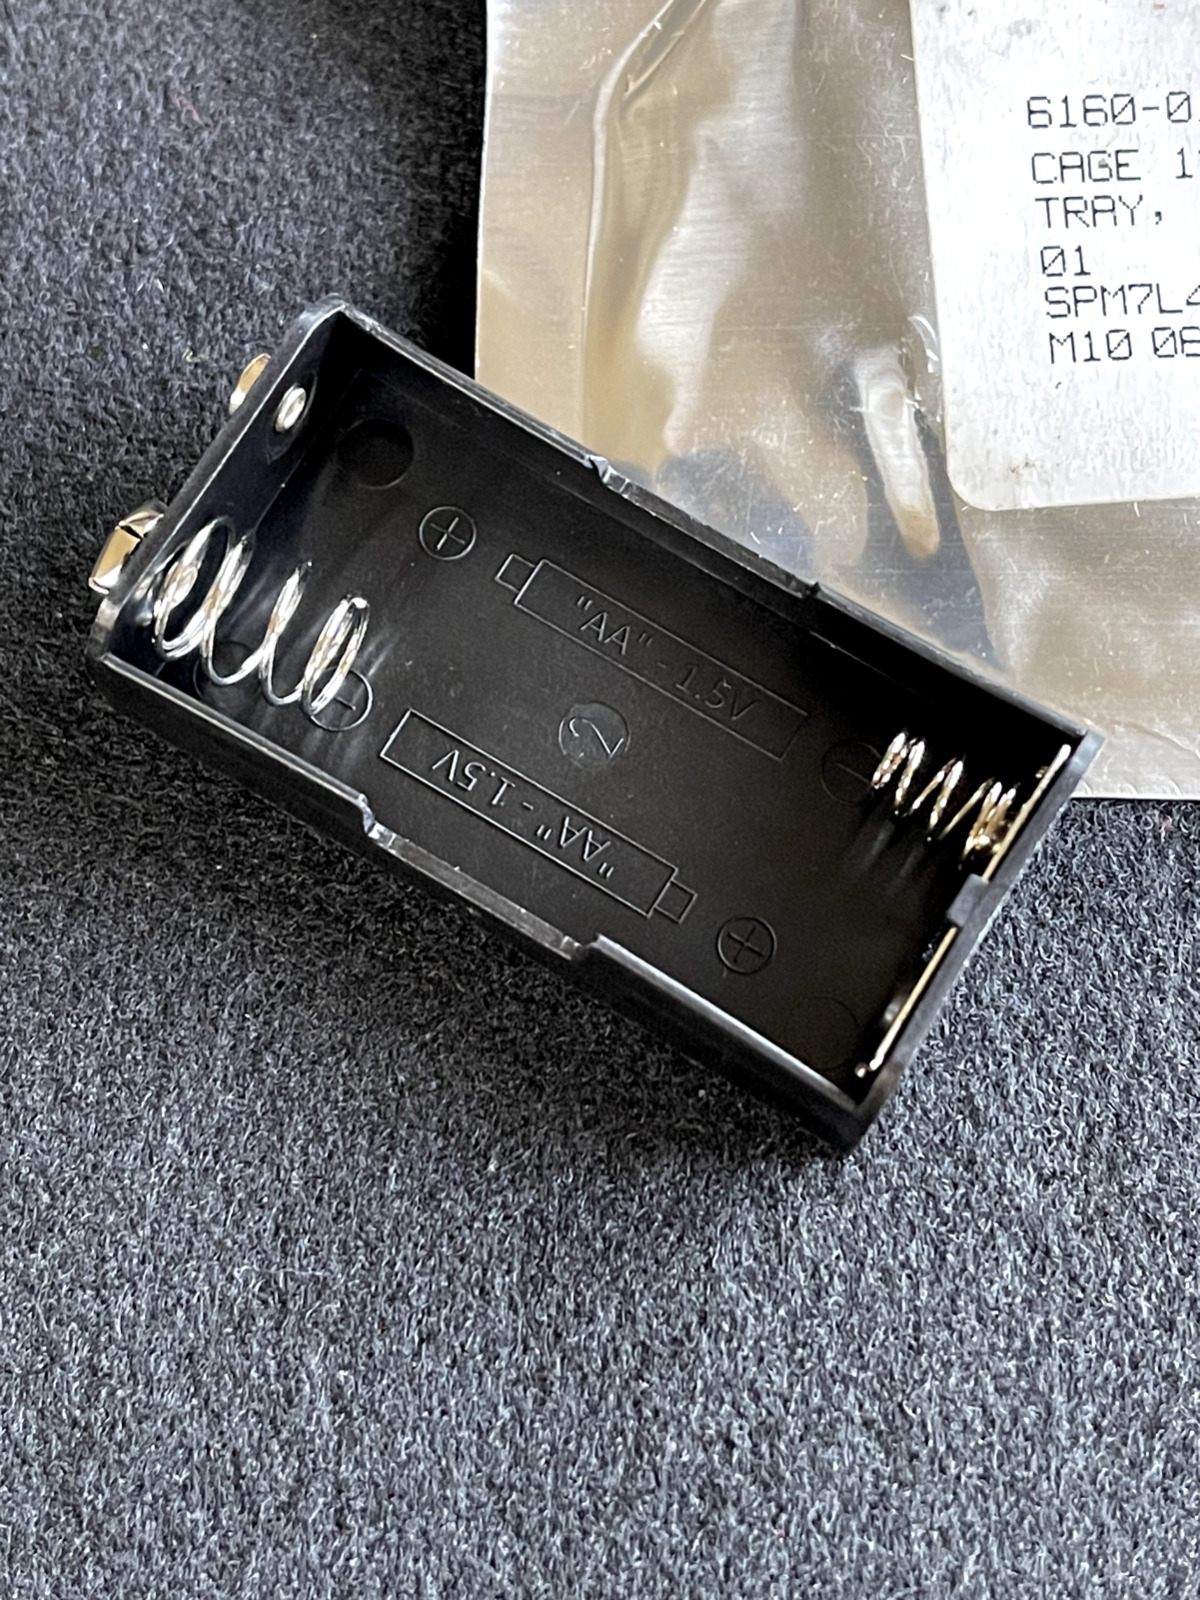 NVG Battery Pack Trays USA Made - Single Tray